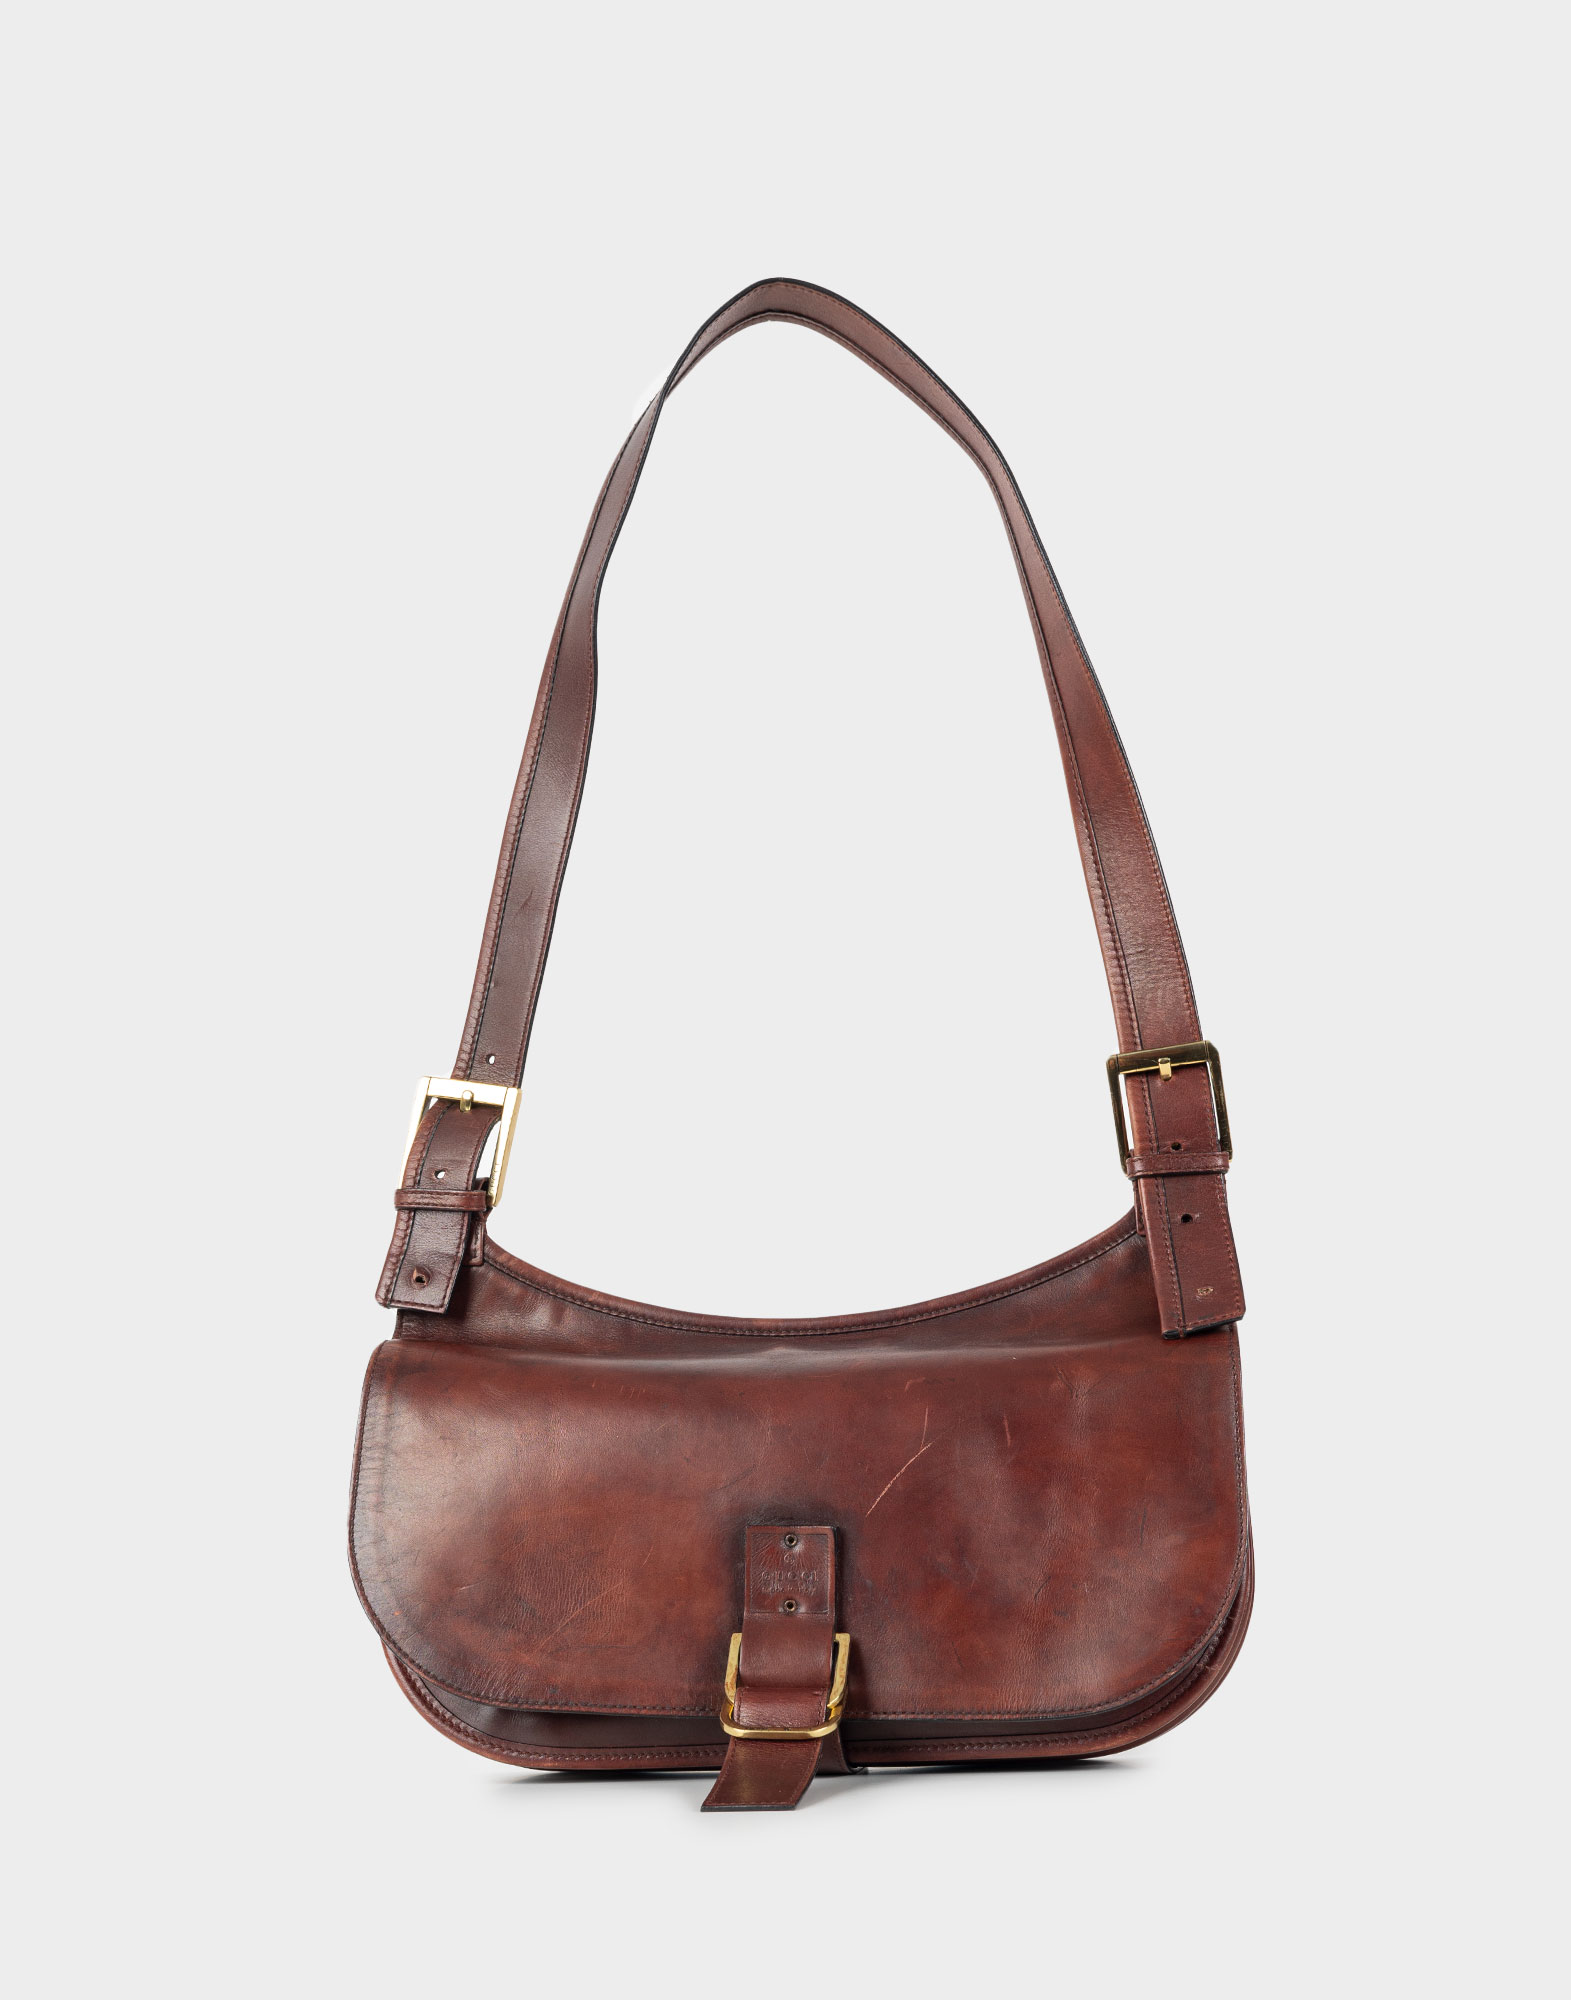 Dark brown leather Gucci bag with shoulder strap.